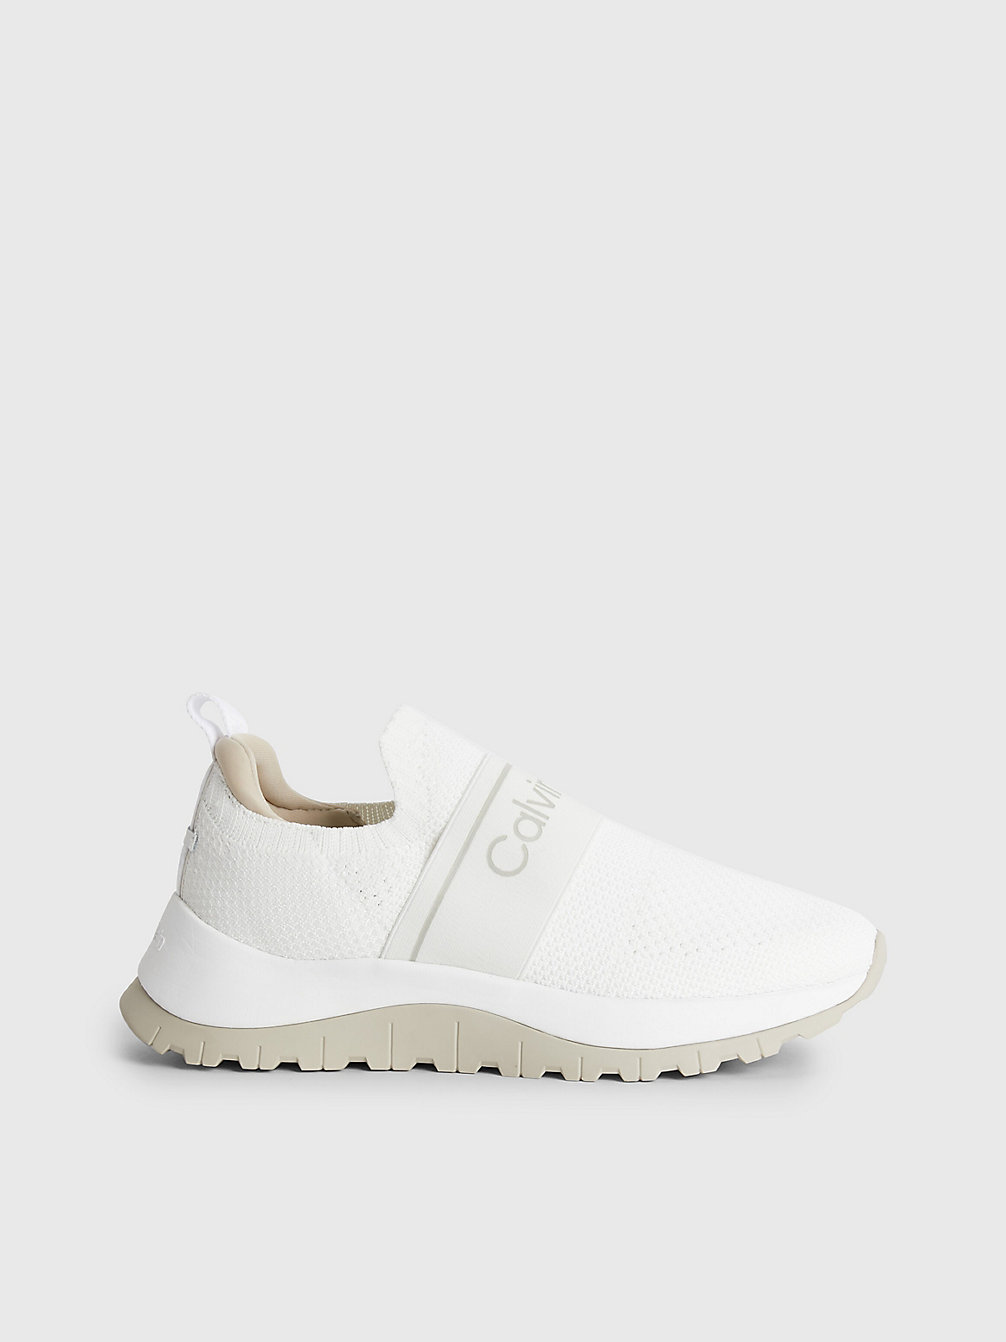 WHITE / DK ECRU > Strick-Slip-On-Sneakers Aus Recyceltem Material > undefined Damen - Calvin Klein